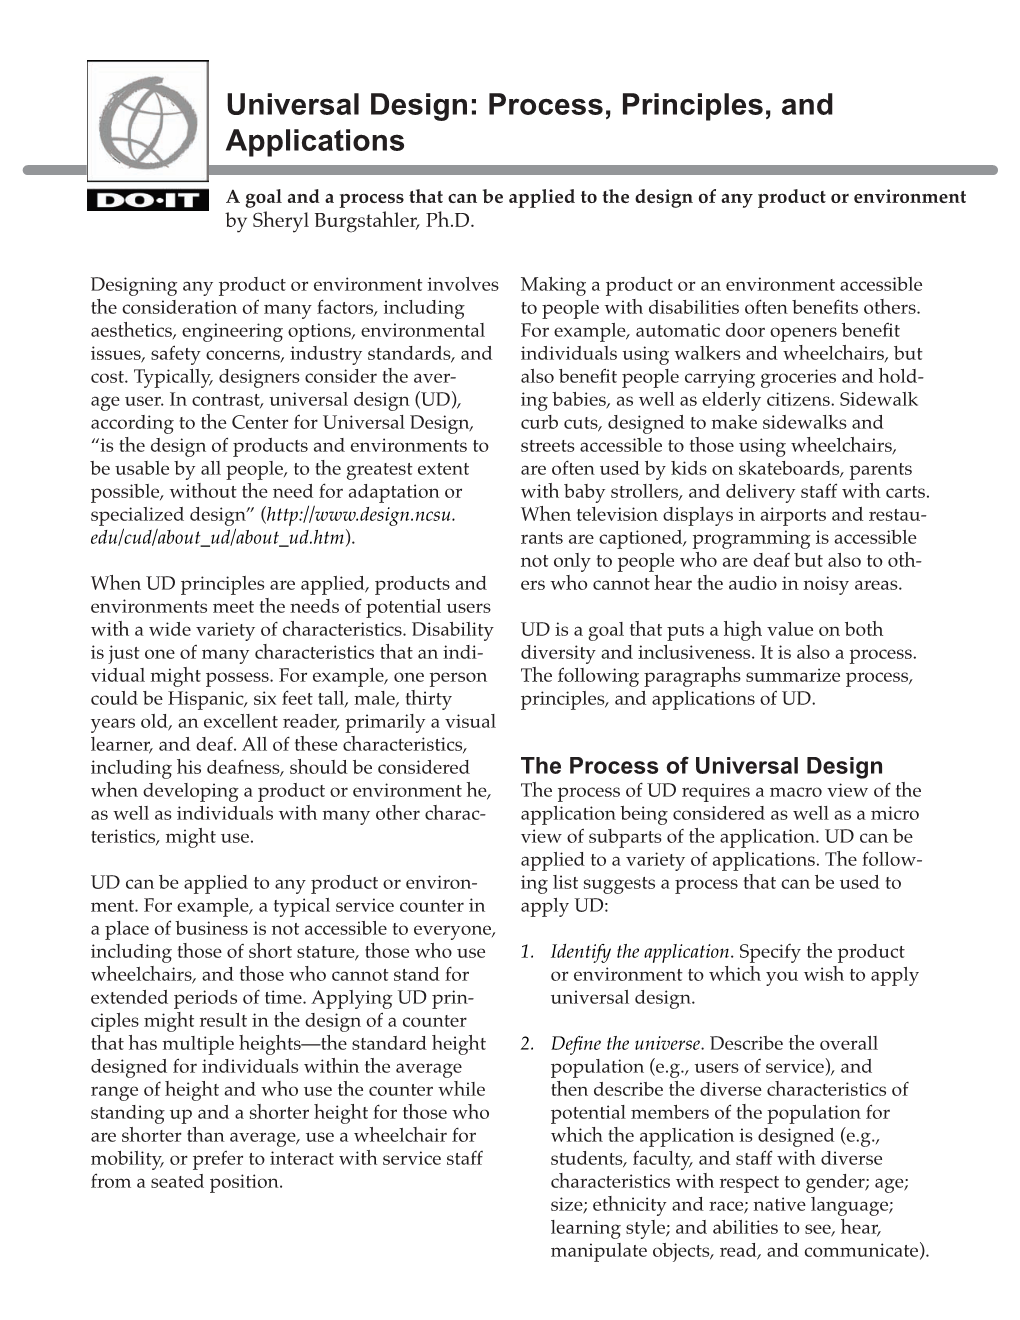 Universal Design: Process, Principles, and Applications